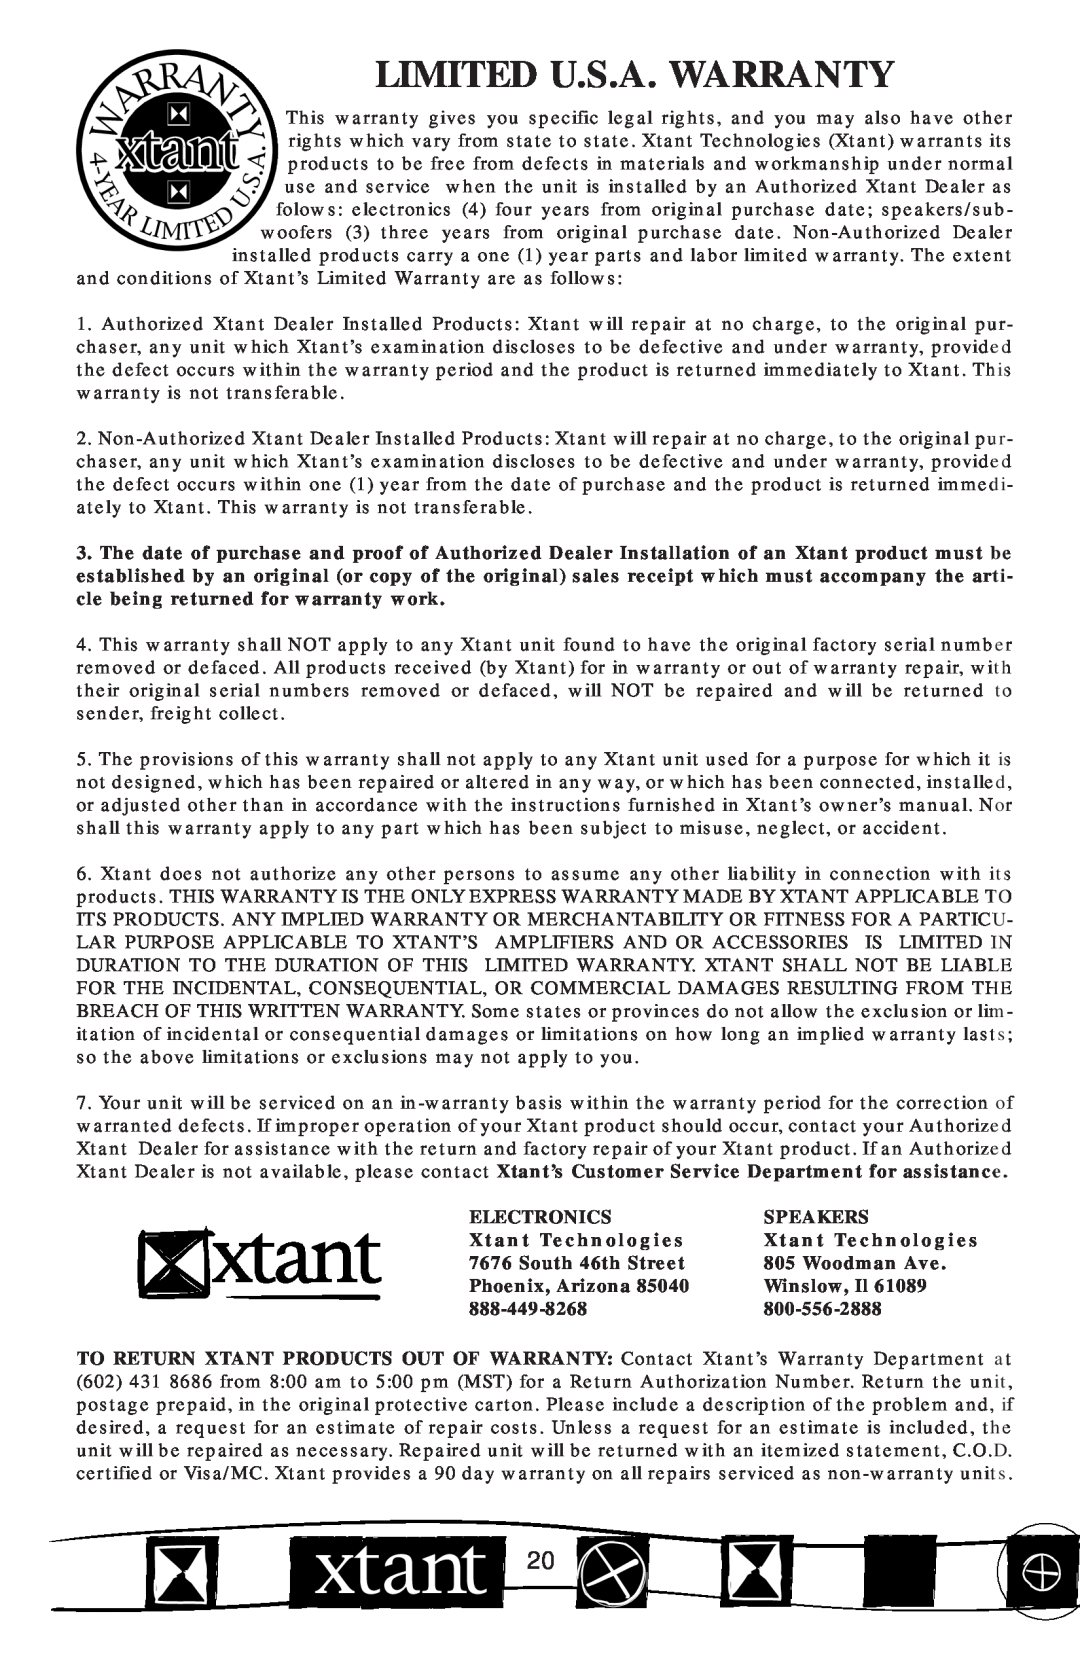 Xtant M Series manual Limited U.S.A. Warranty 